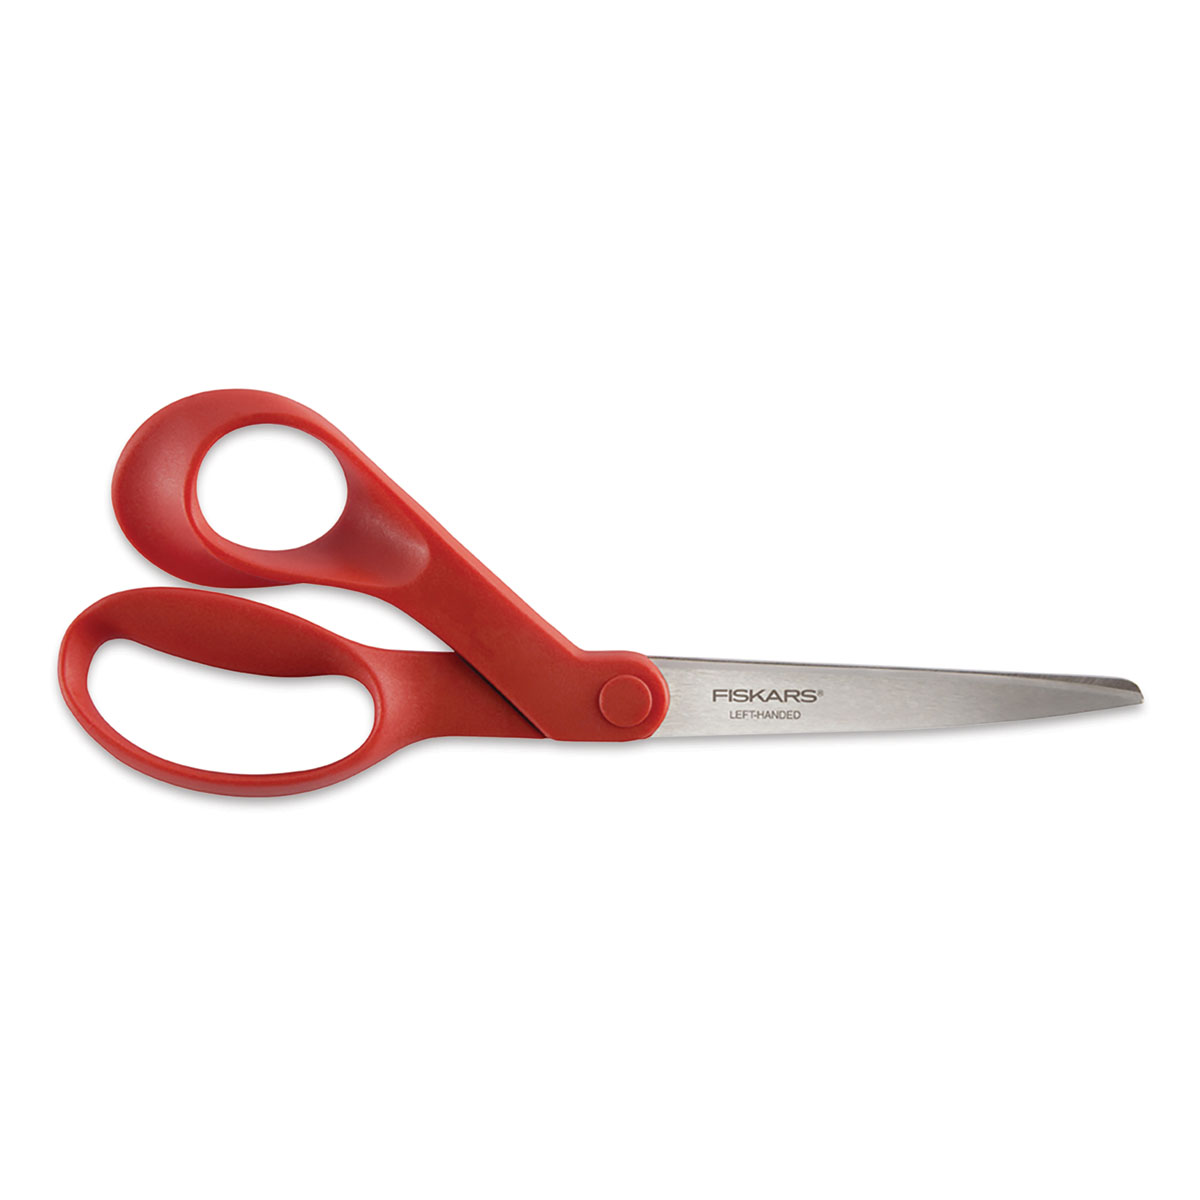 2 Pcs Left-handed Scissors